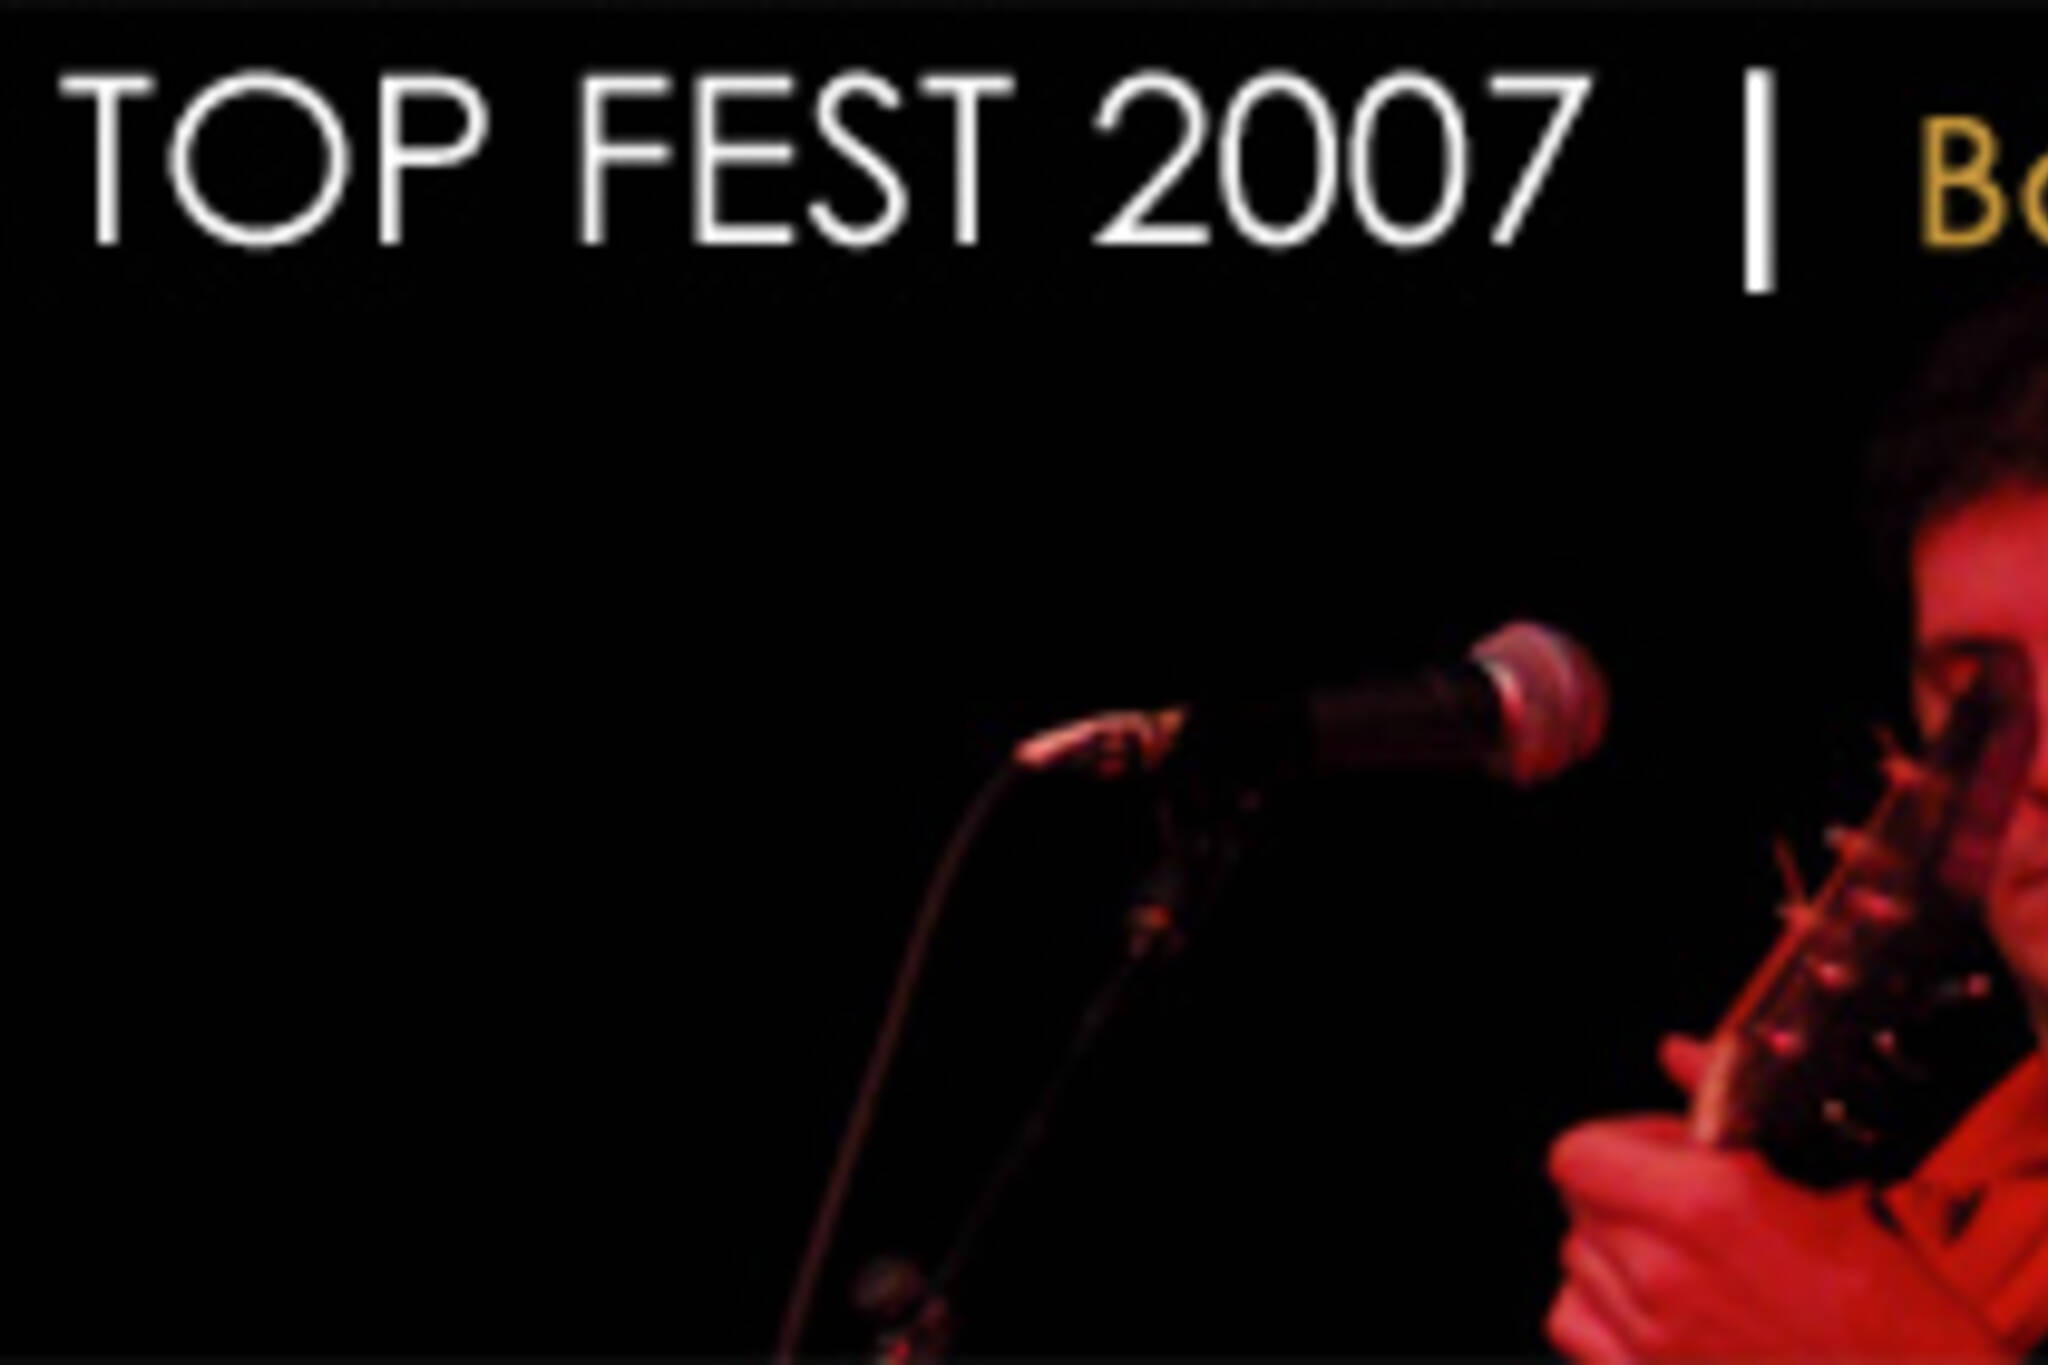 Over The Top Fest 2007: Bob Wiseman